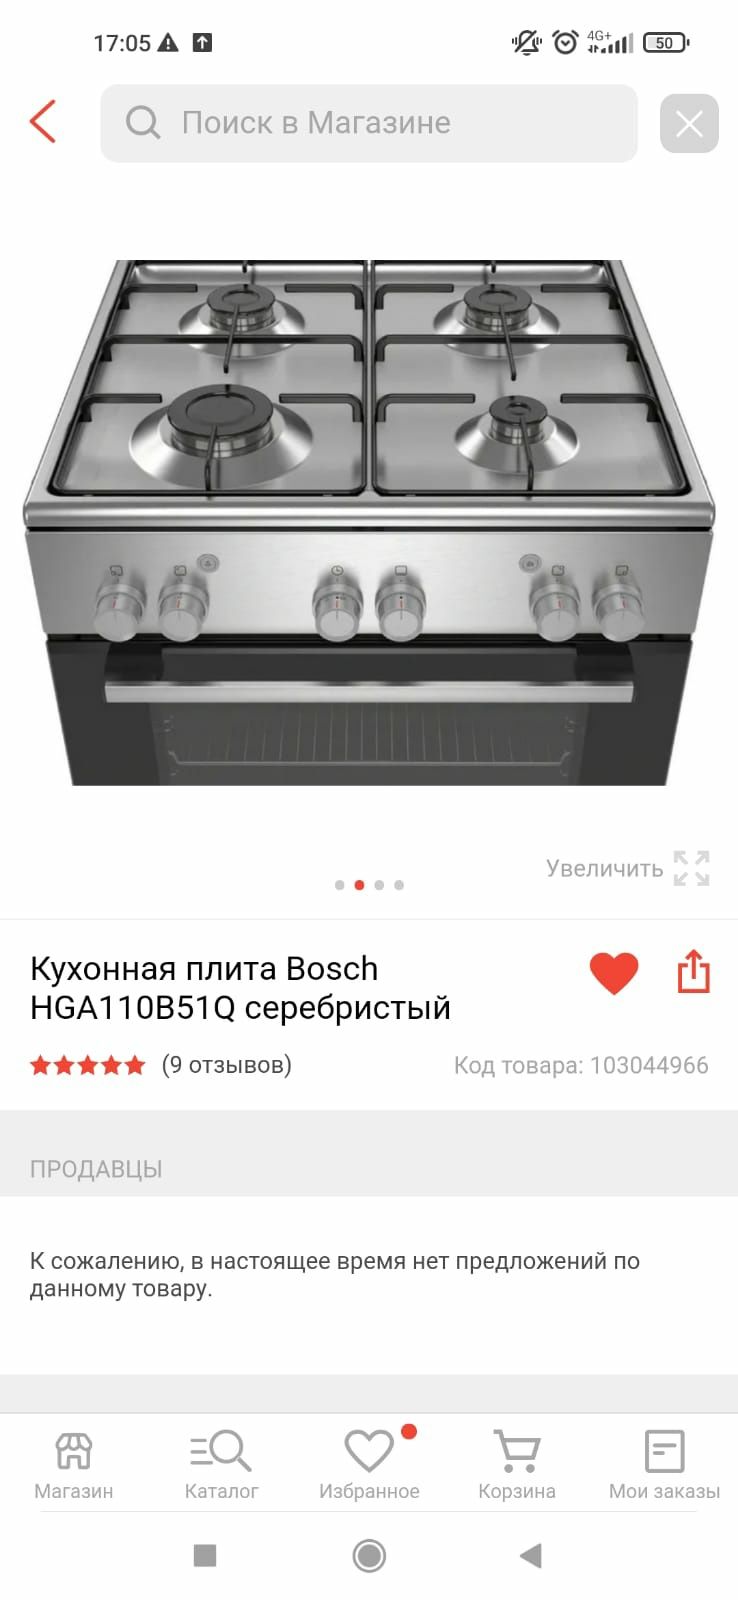 Кухонная плита Bosch HGA110B51Q серебристый